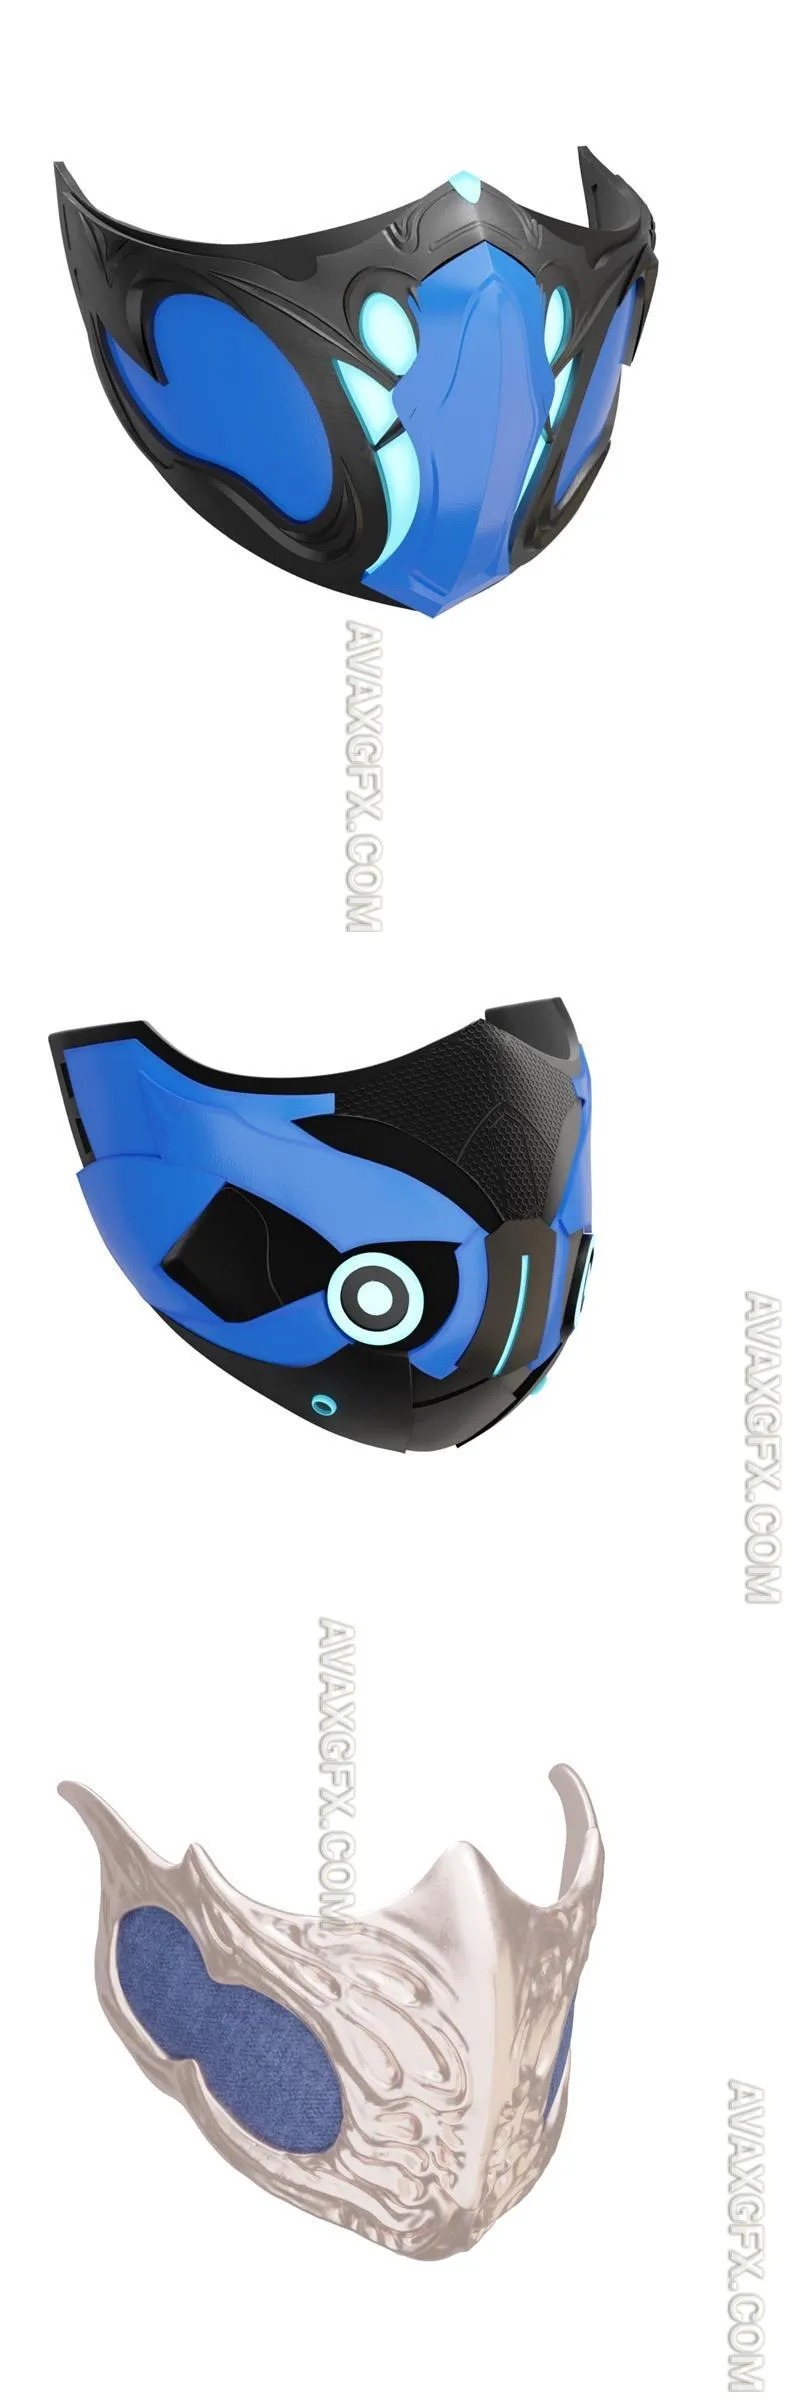 SubZero Mask MK1 - STL 3D Model